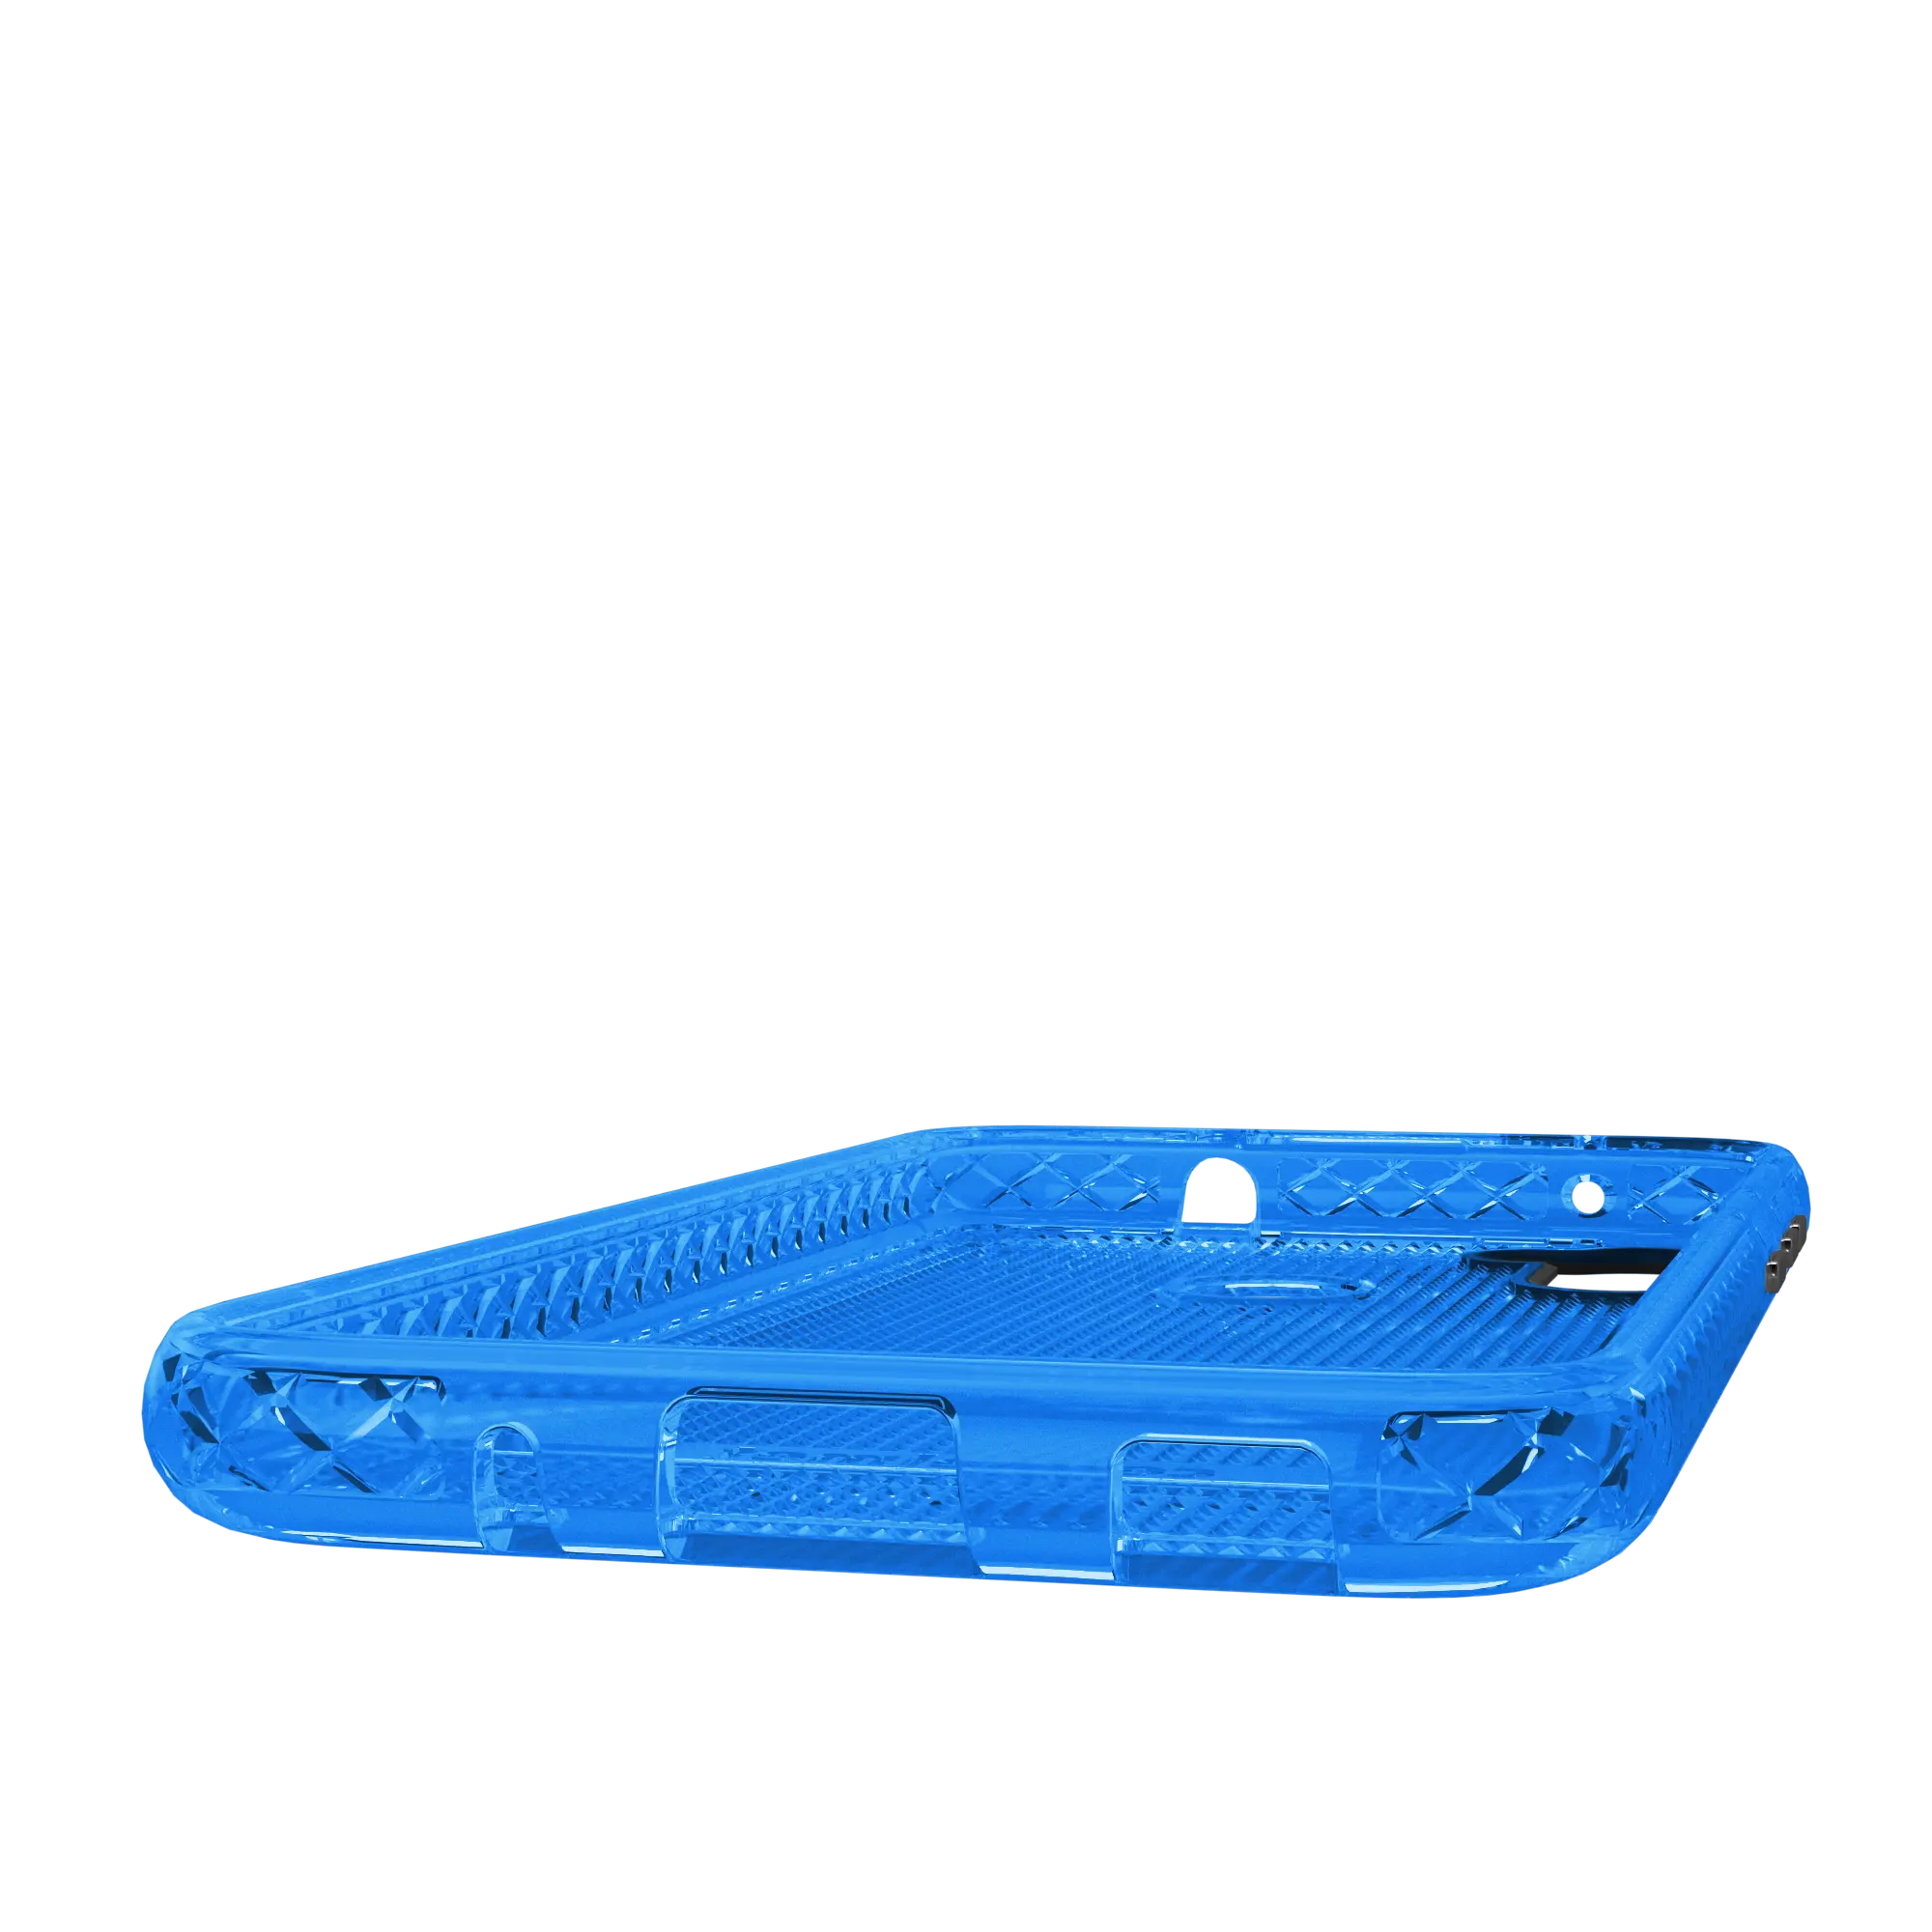 Altitude X Series for Samsung Galaxy S21  - Blue - Case -  - cellhelmet